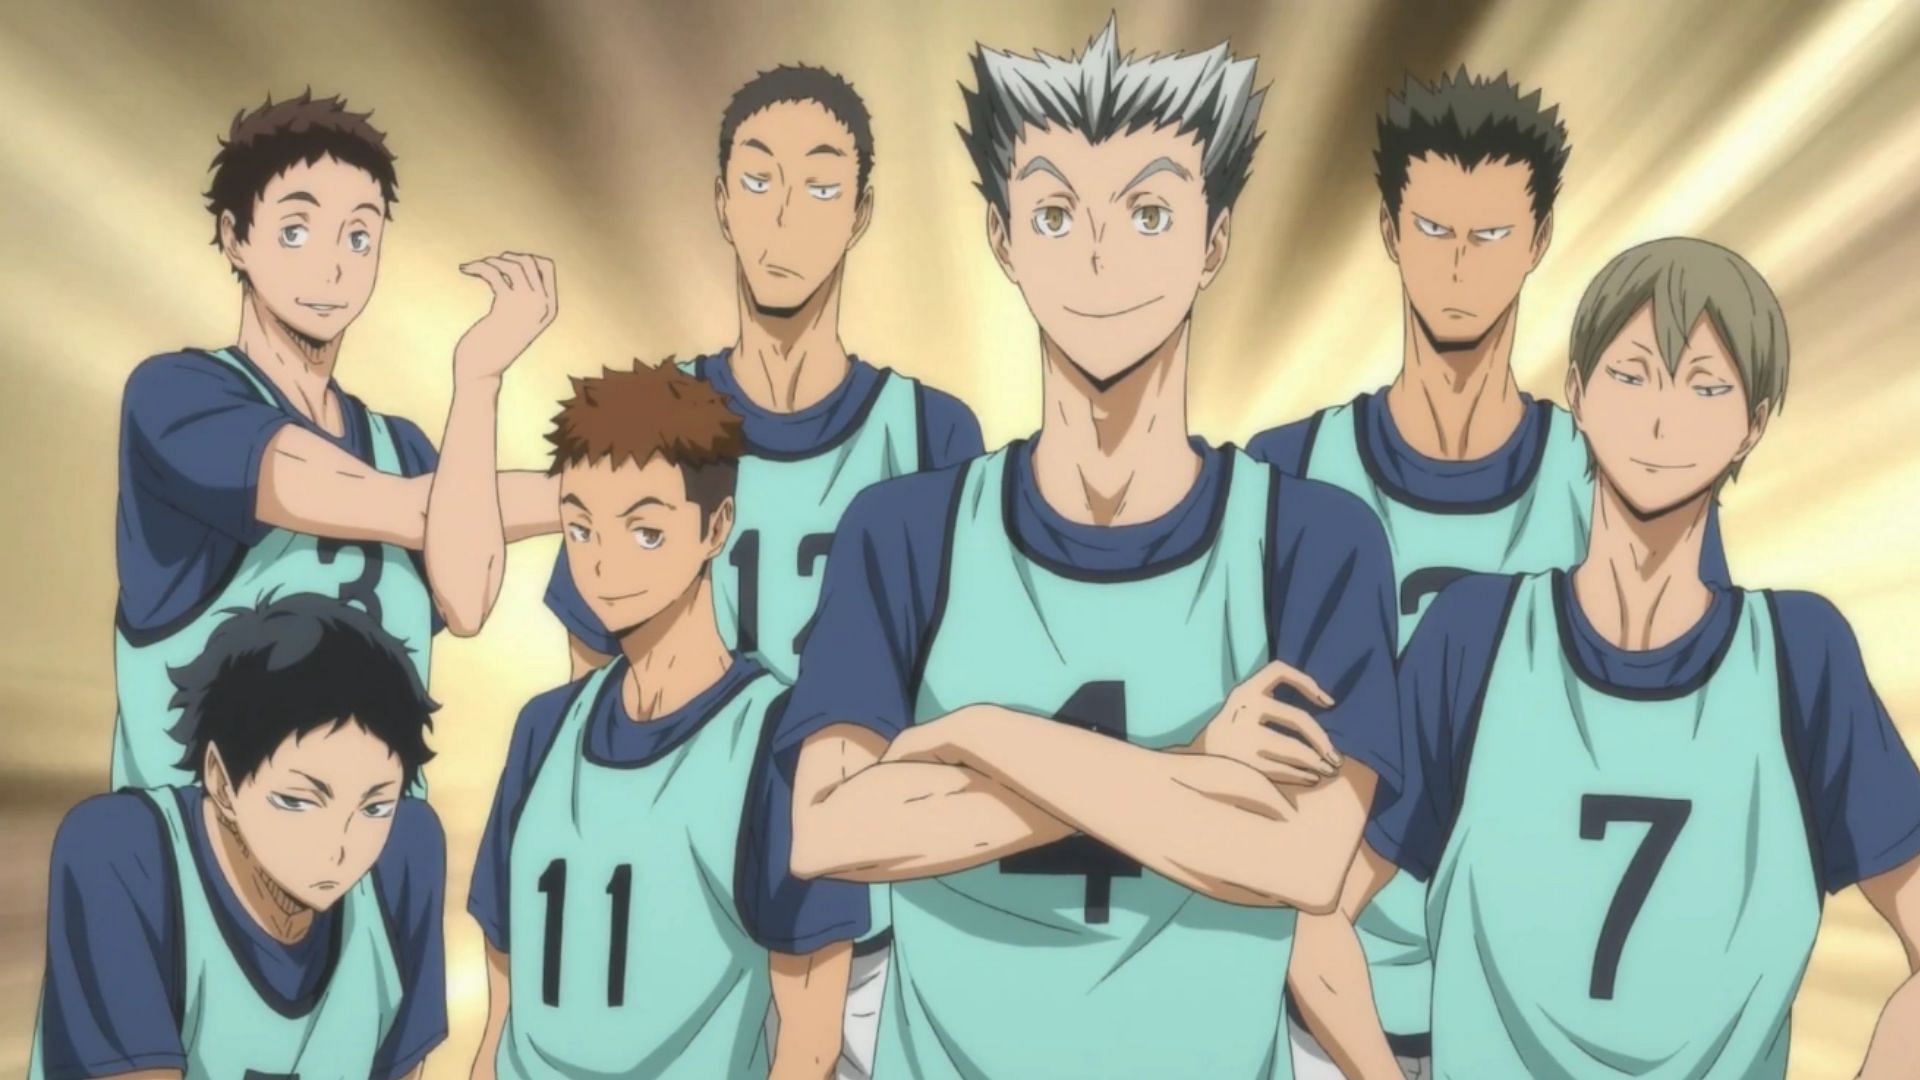 The Fukurōdani team (Image via Production I.G)